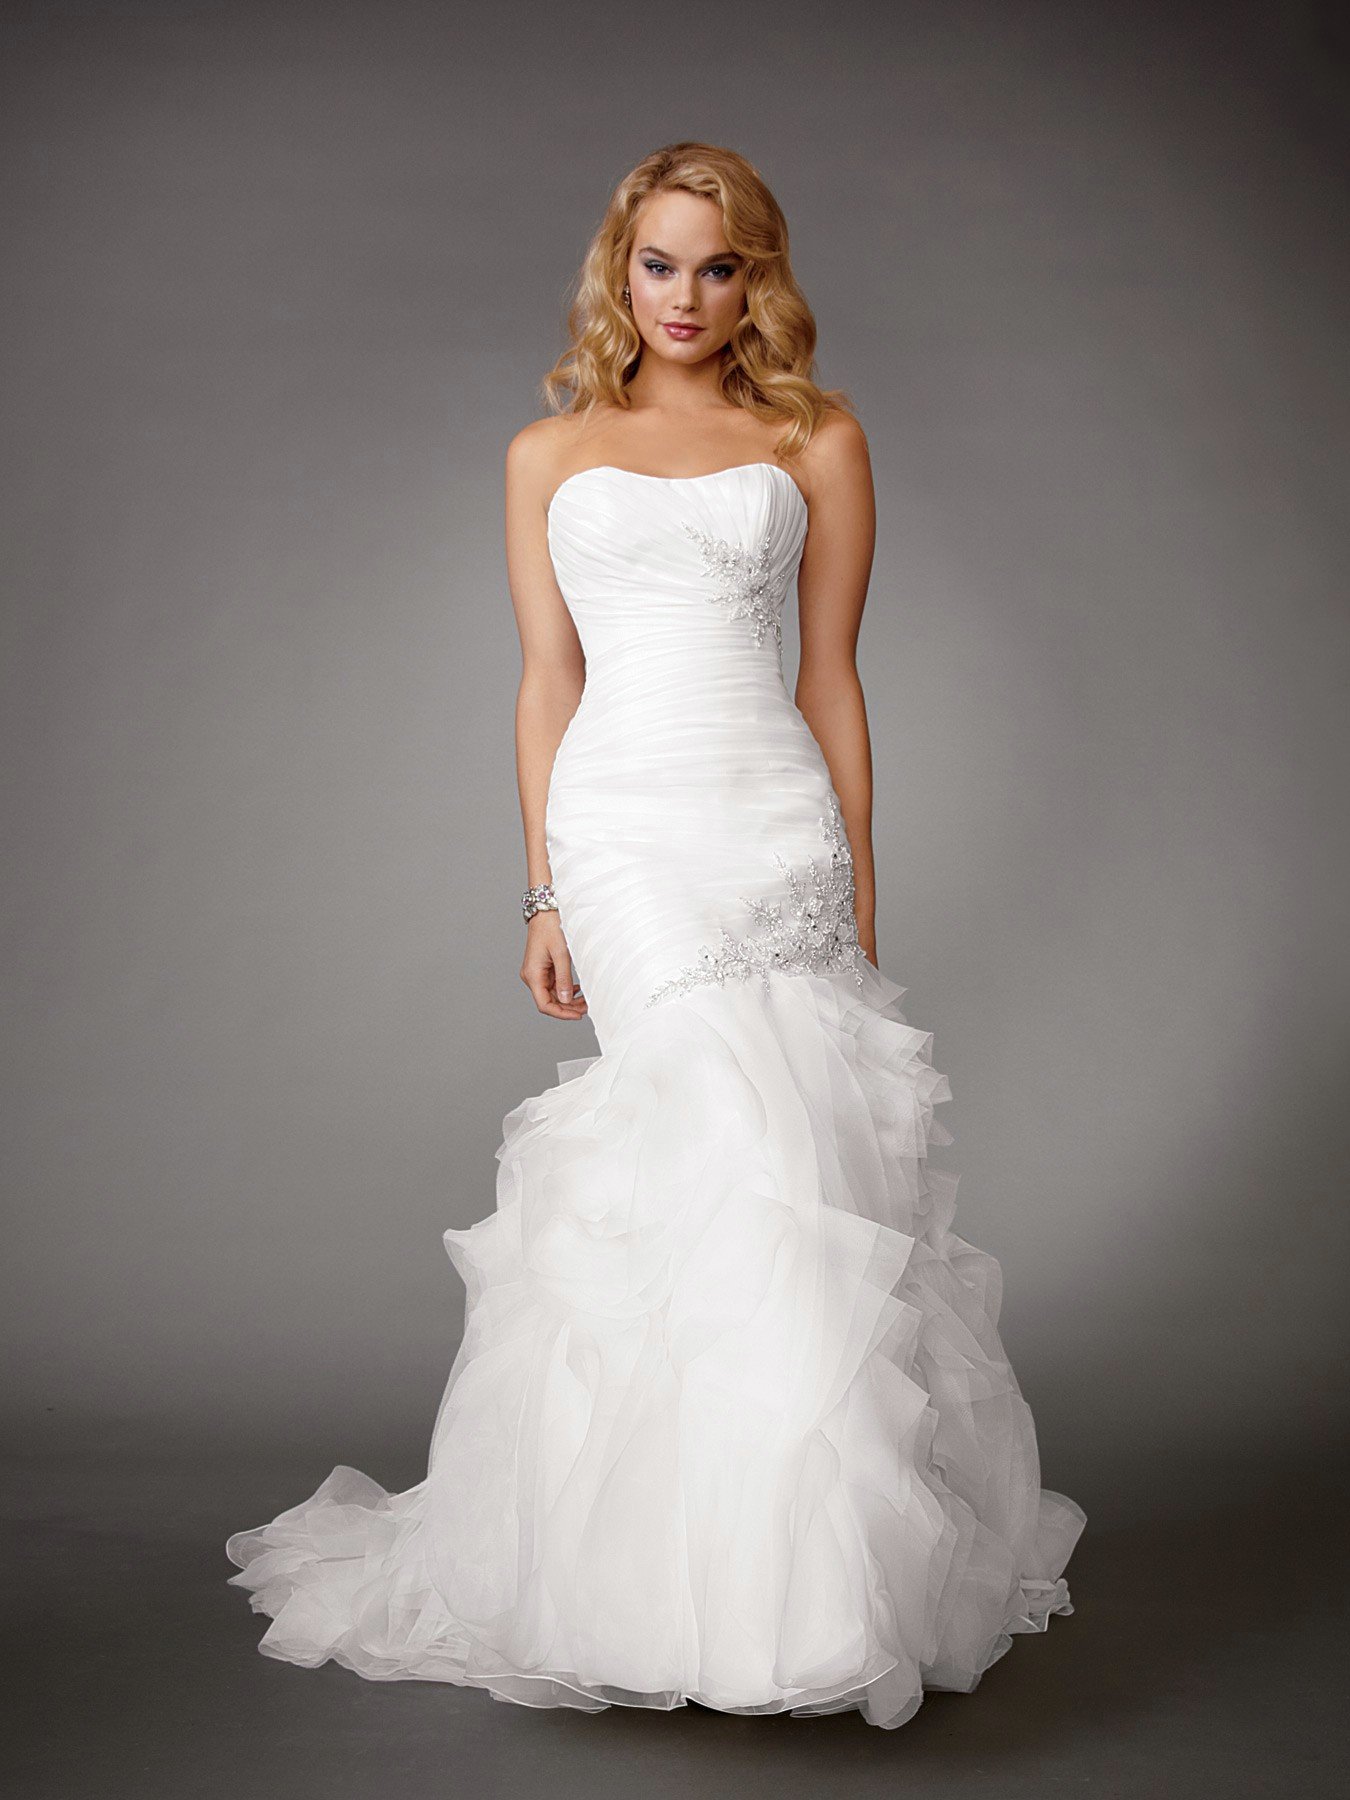 25 Mermaid Wedding Dresses Styles - Perfect Wedding Dress - MagMent